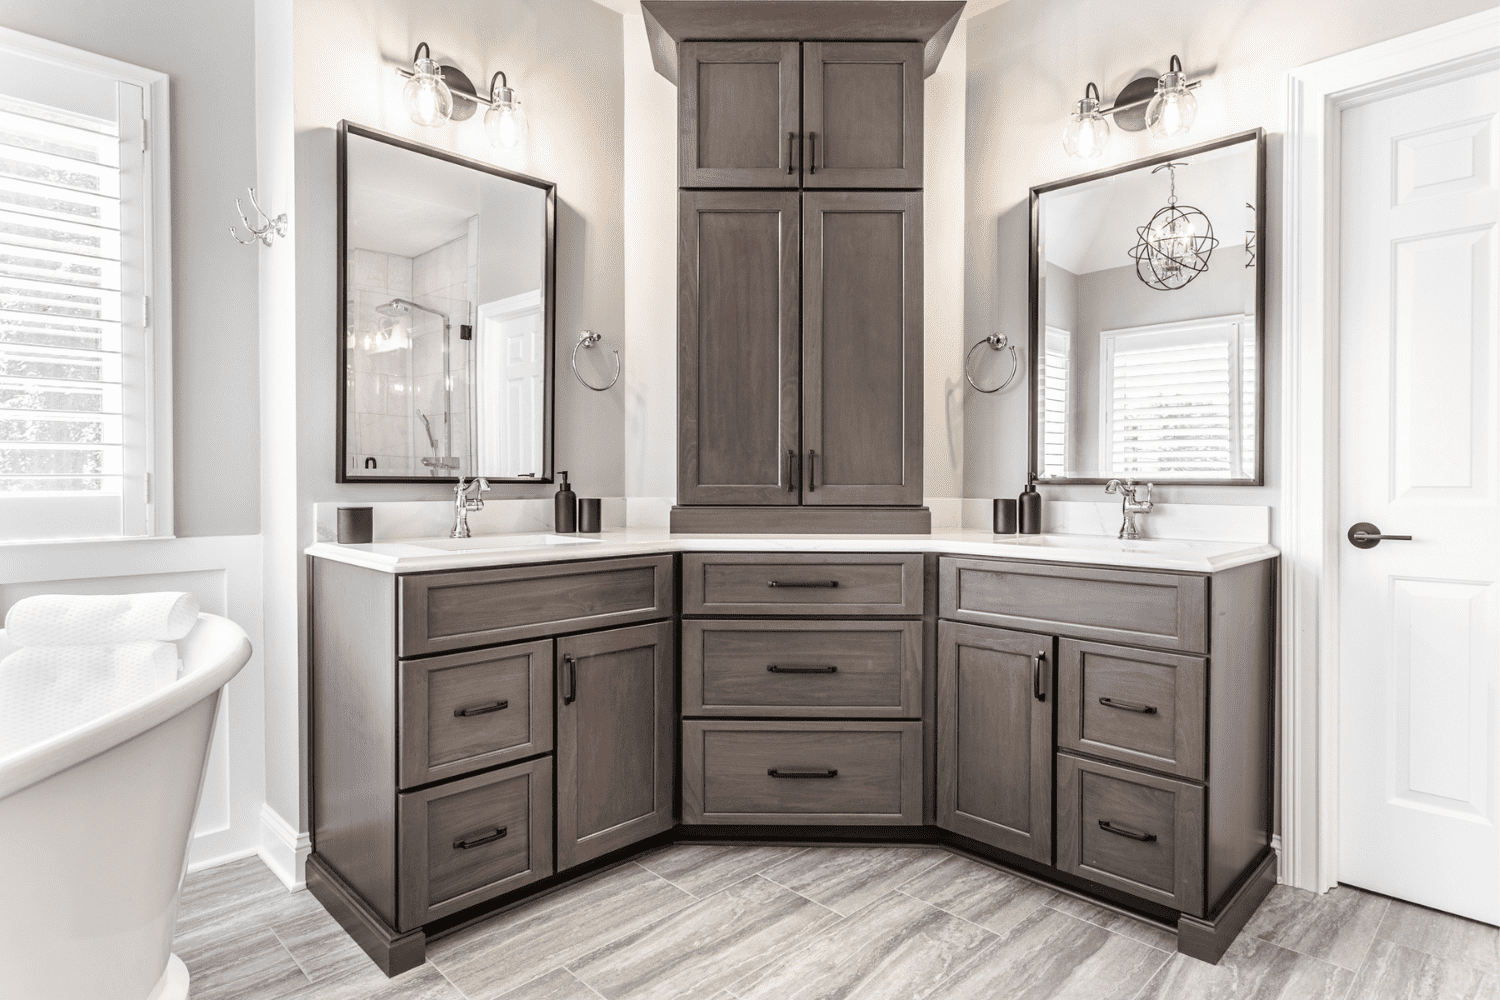 Nicholas Design Build |         A master bath remodel featuring gray cabinets and a bathtub.